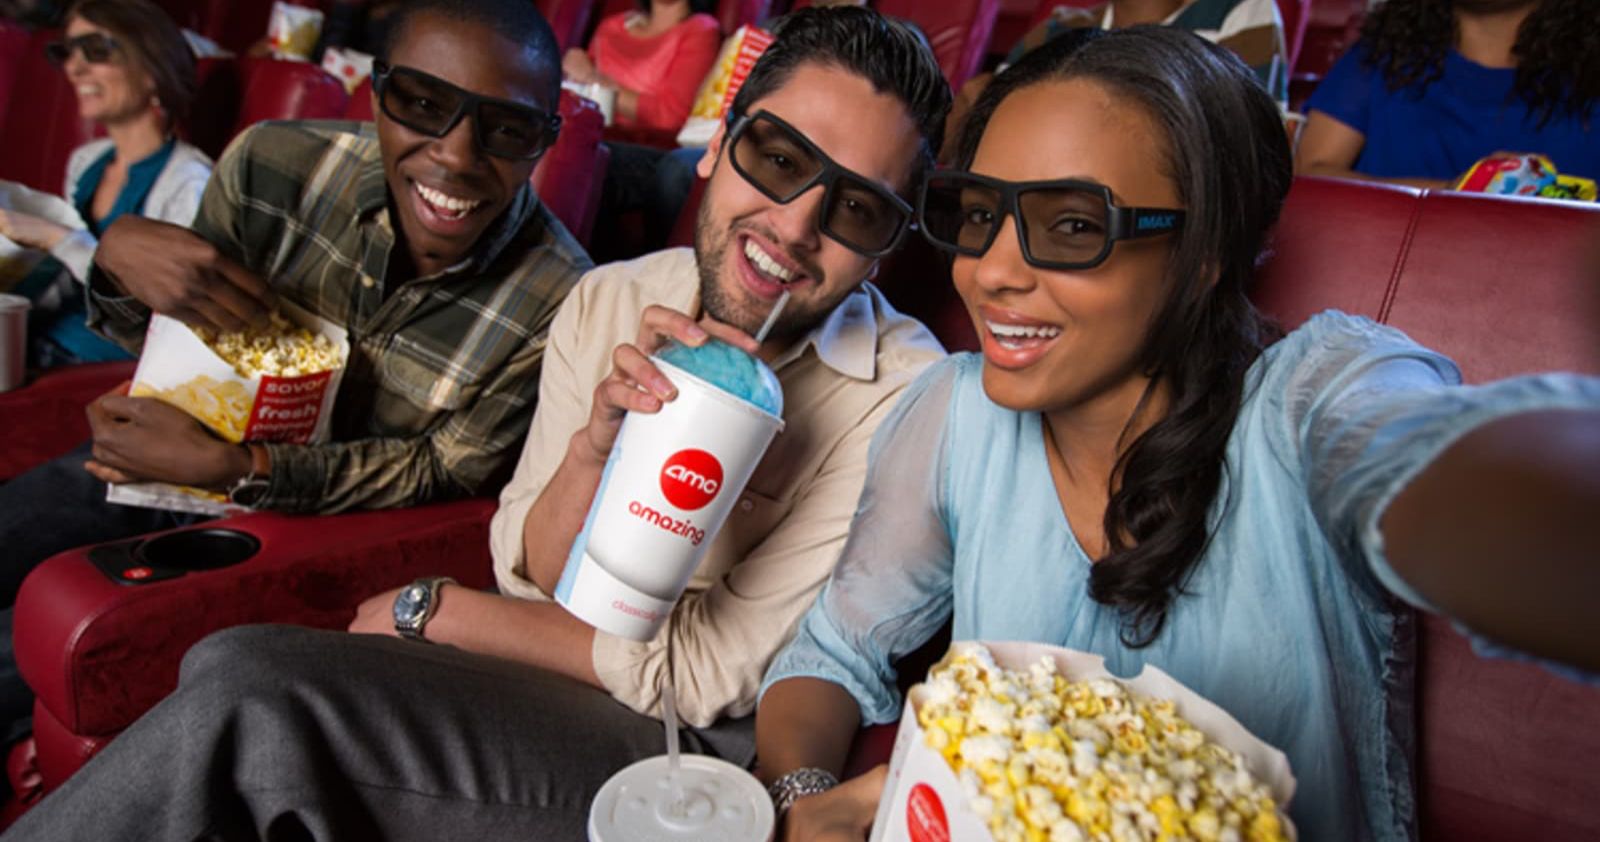 Amc And Cinemark Theatres Will Stay Open Despite Major Movie Delays